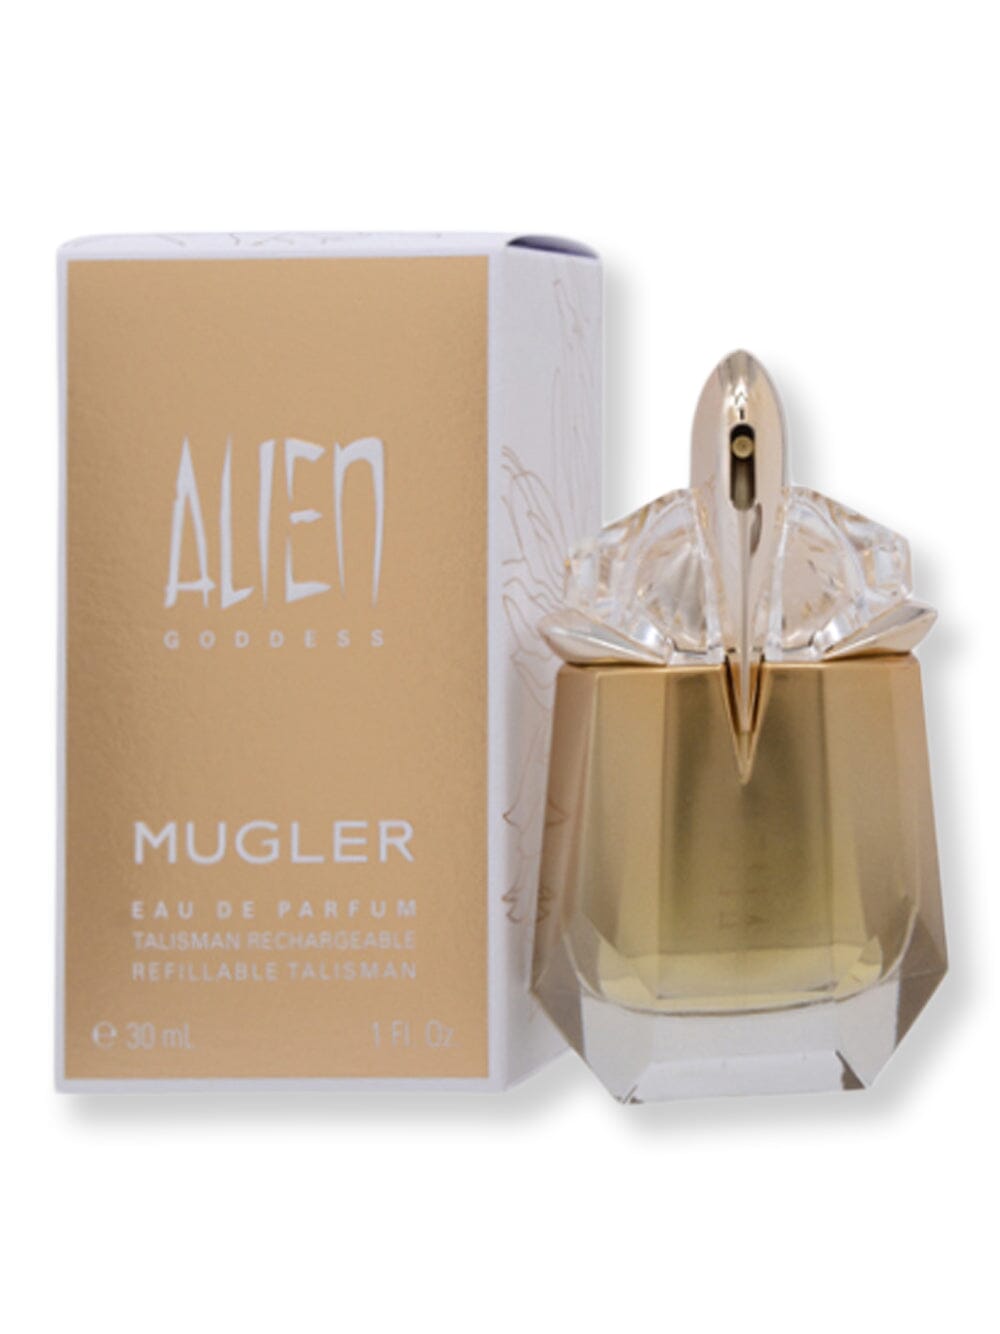 Thierry Mugler Thierry Mugler Alien Goddess EDP Refillable Spray 1 oz30 ml Perfume 